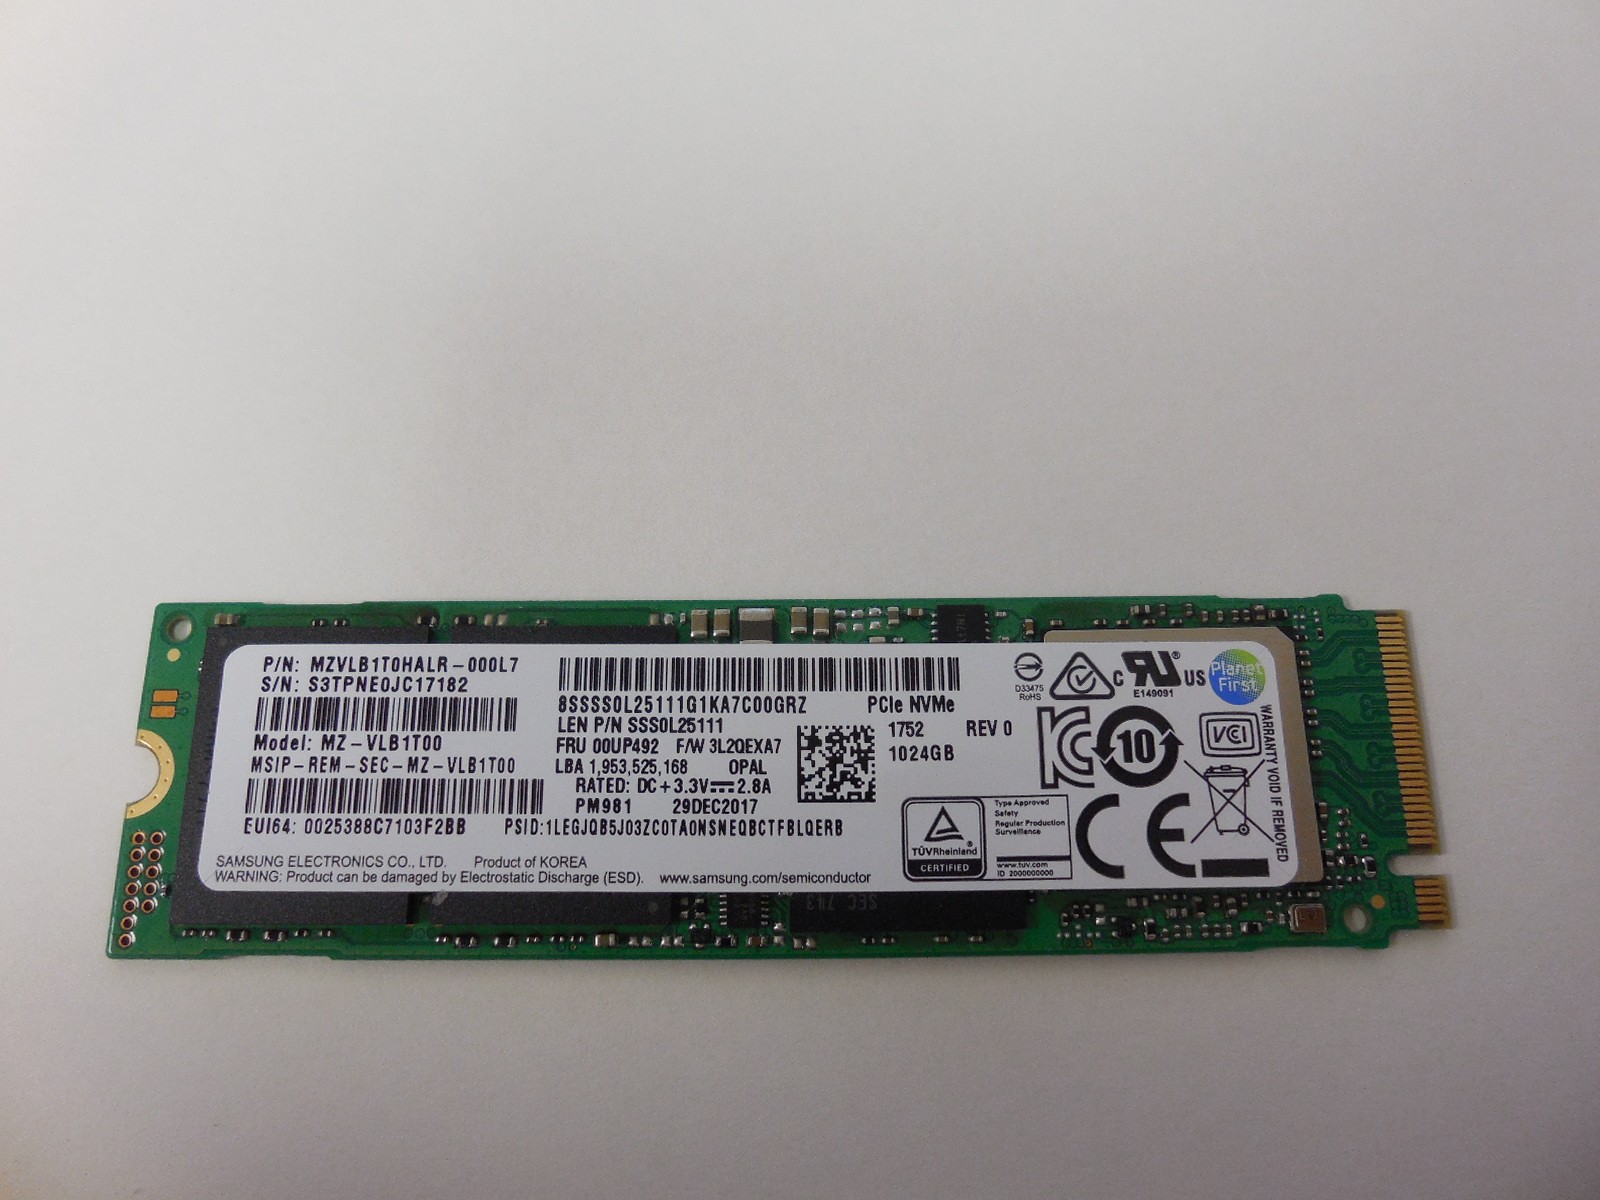 OEM Samsung MZ-VLB1T00 1TB SSD FRU 00UPP492 PM981 PCle NVMe M.2